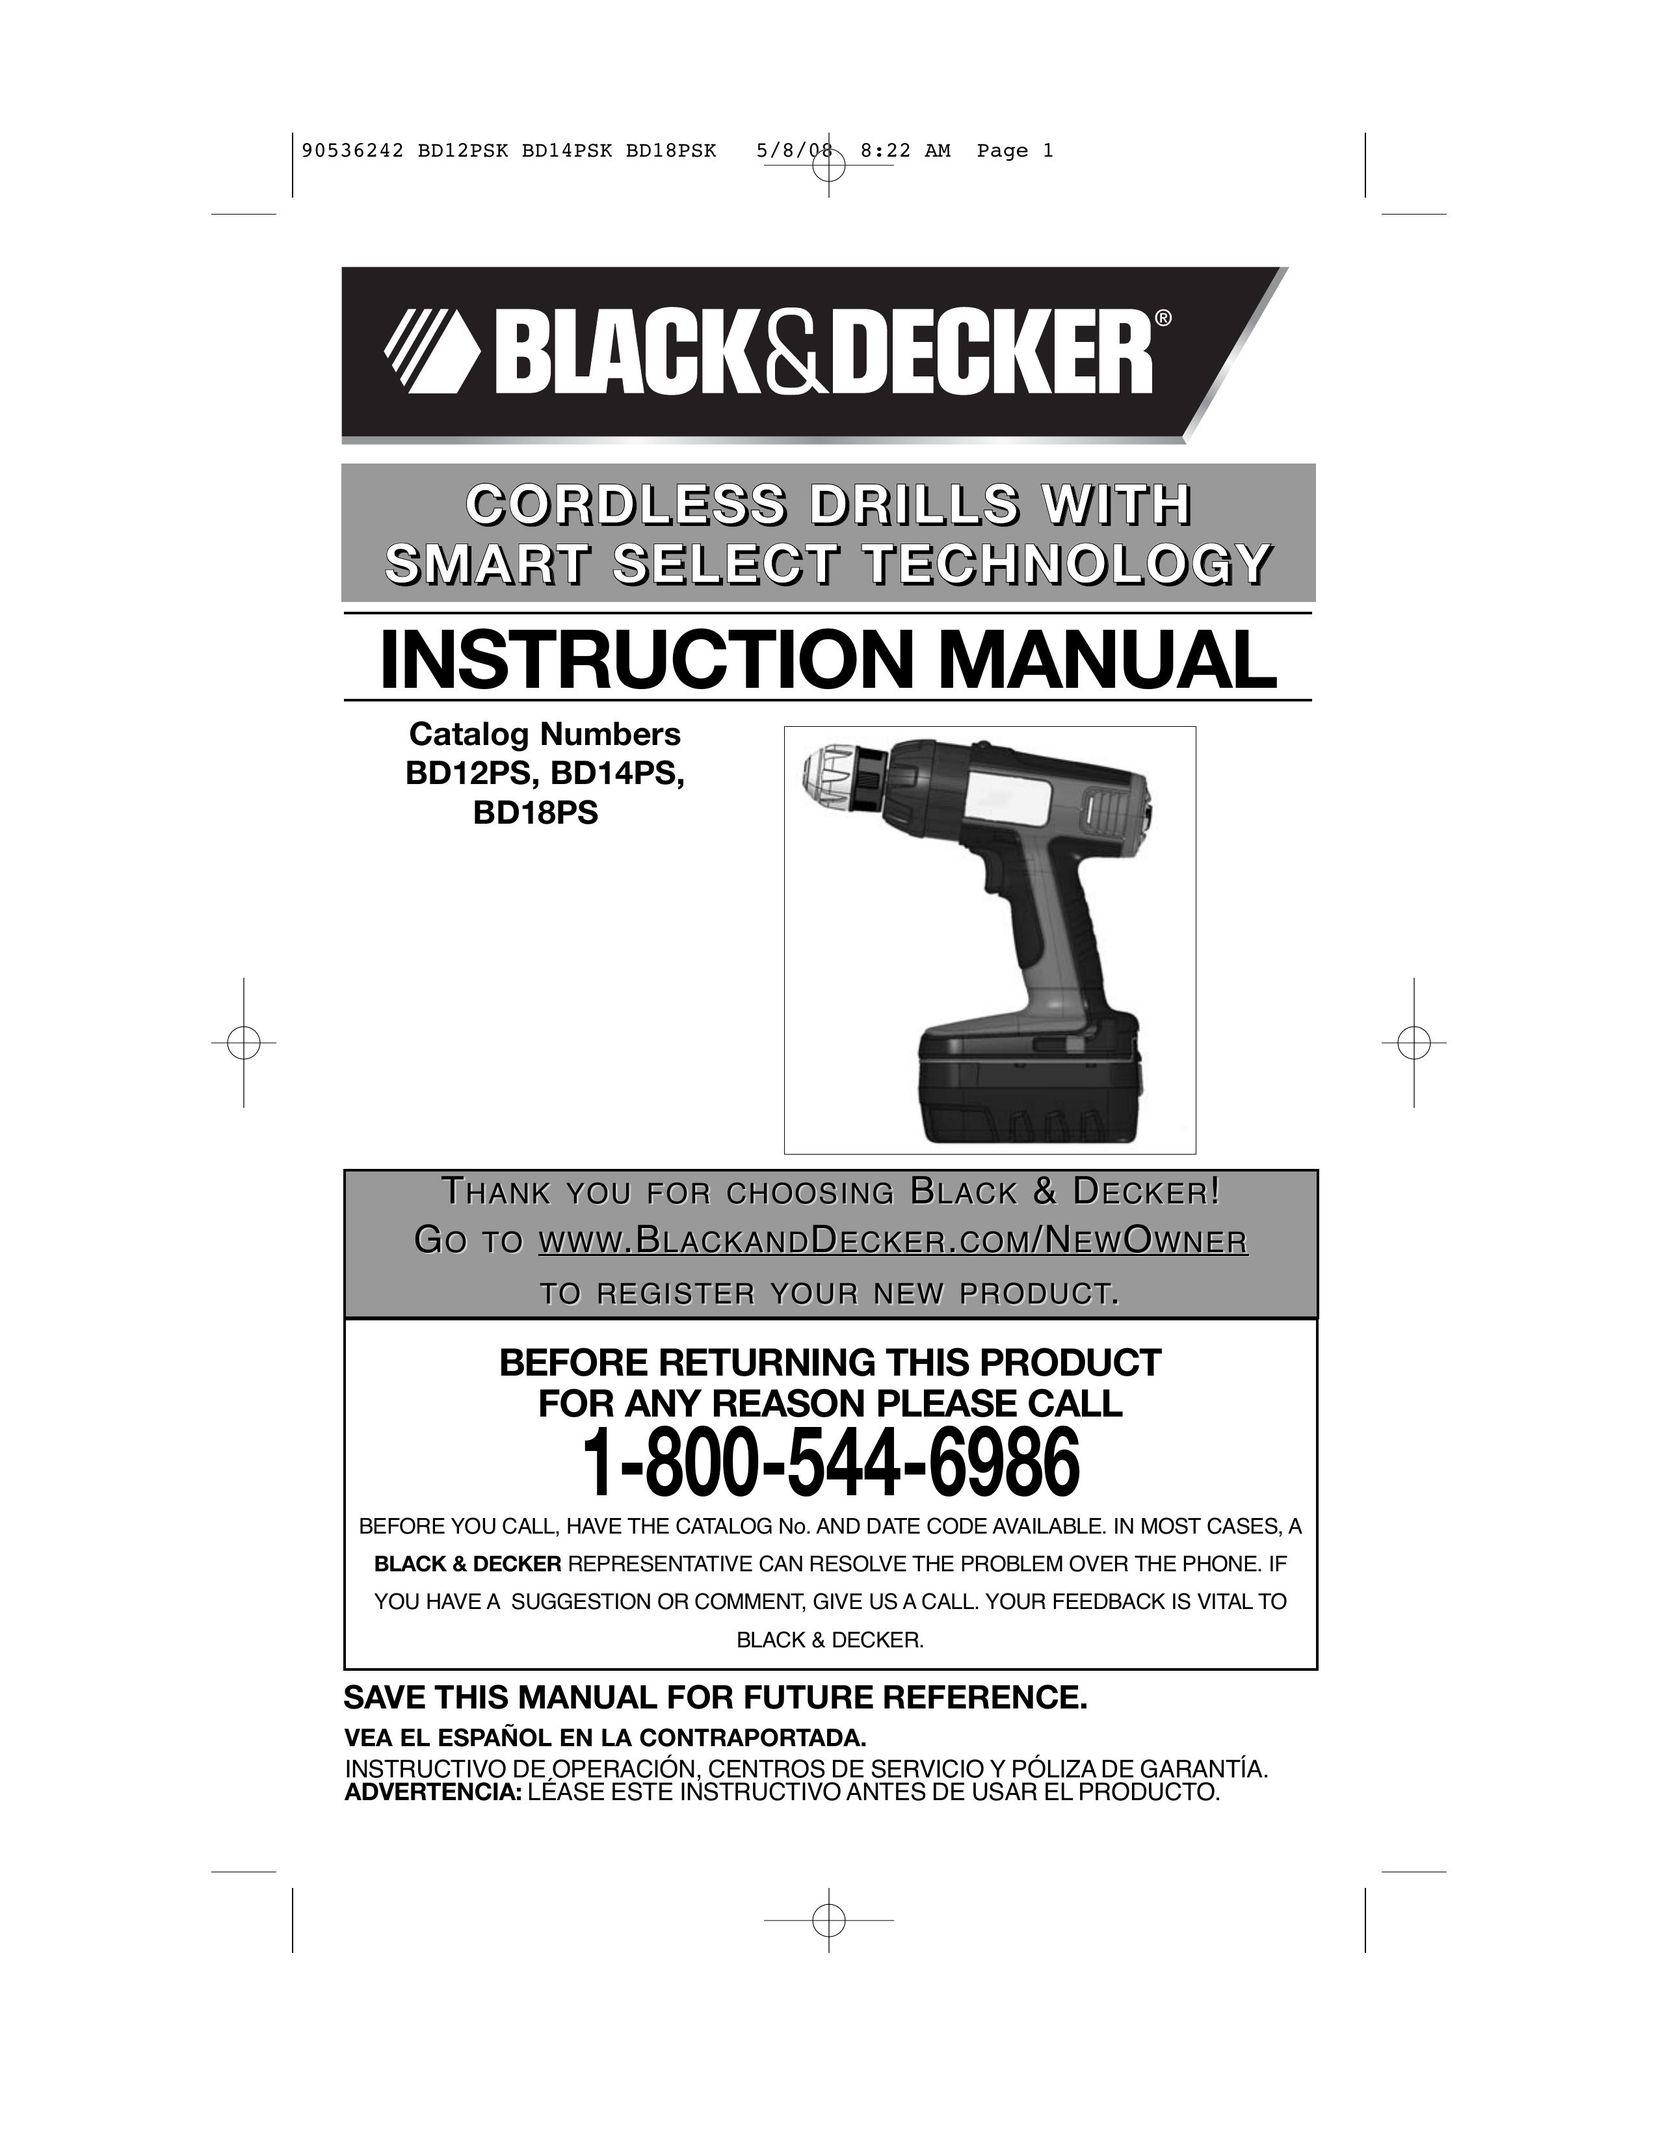 Black & Decker BD14PS Cordless Drill User Manual